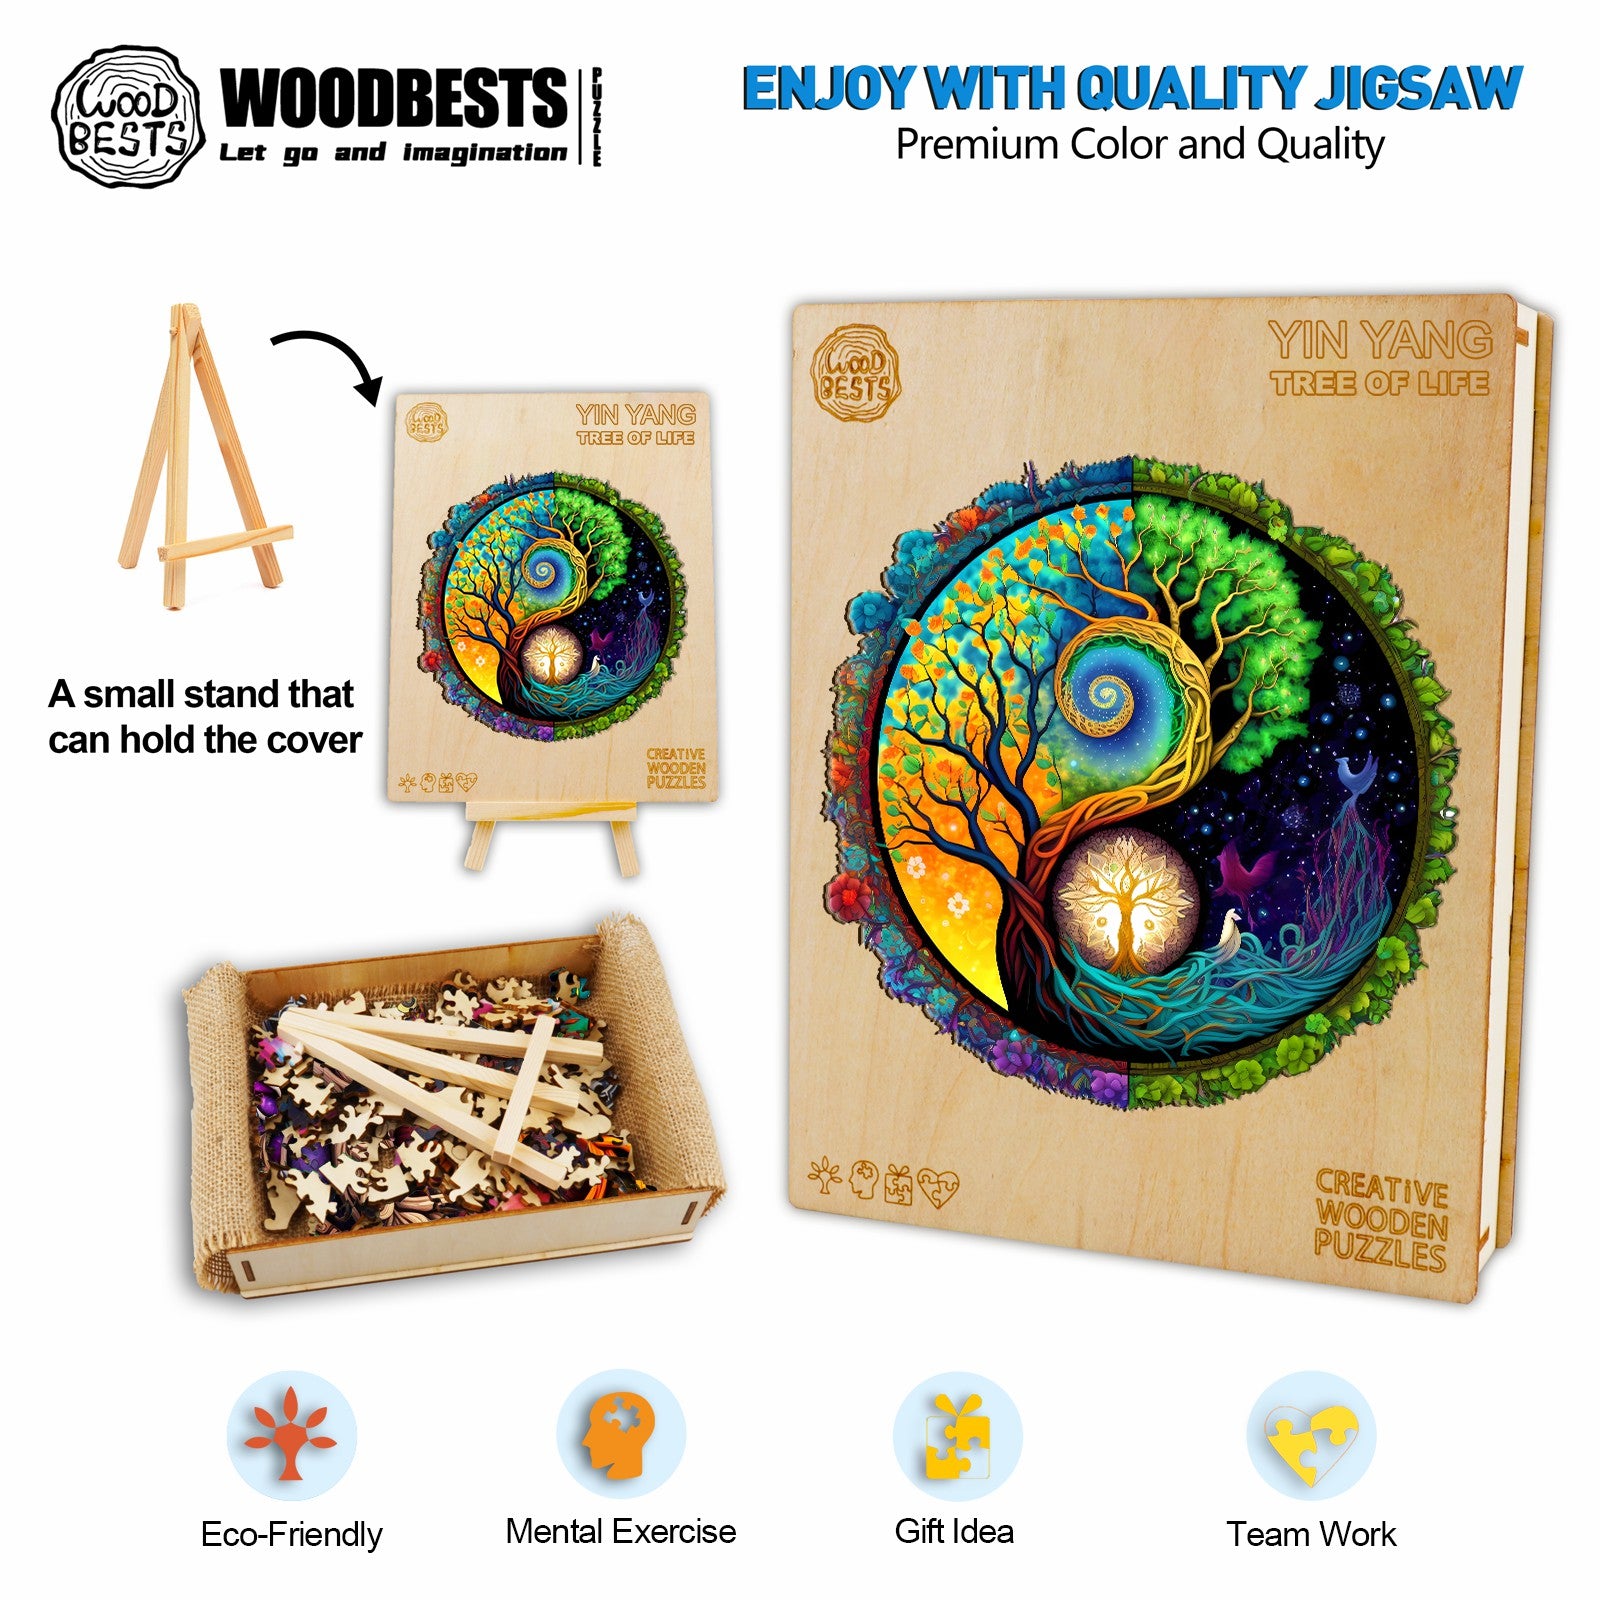 Yin Yang & Tree of Life - 2 Wooden Jigsaw Puzzle